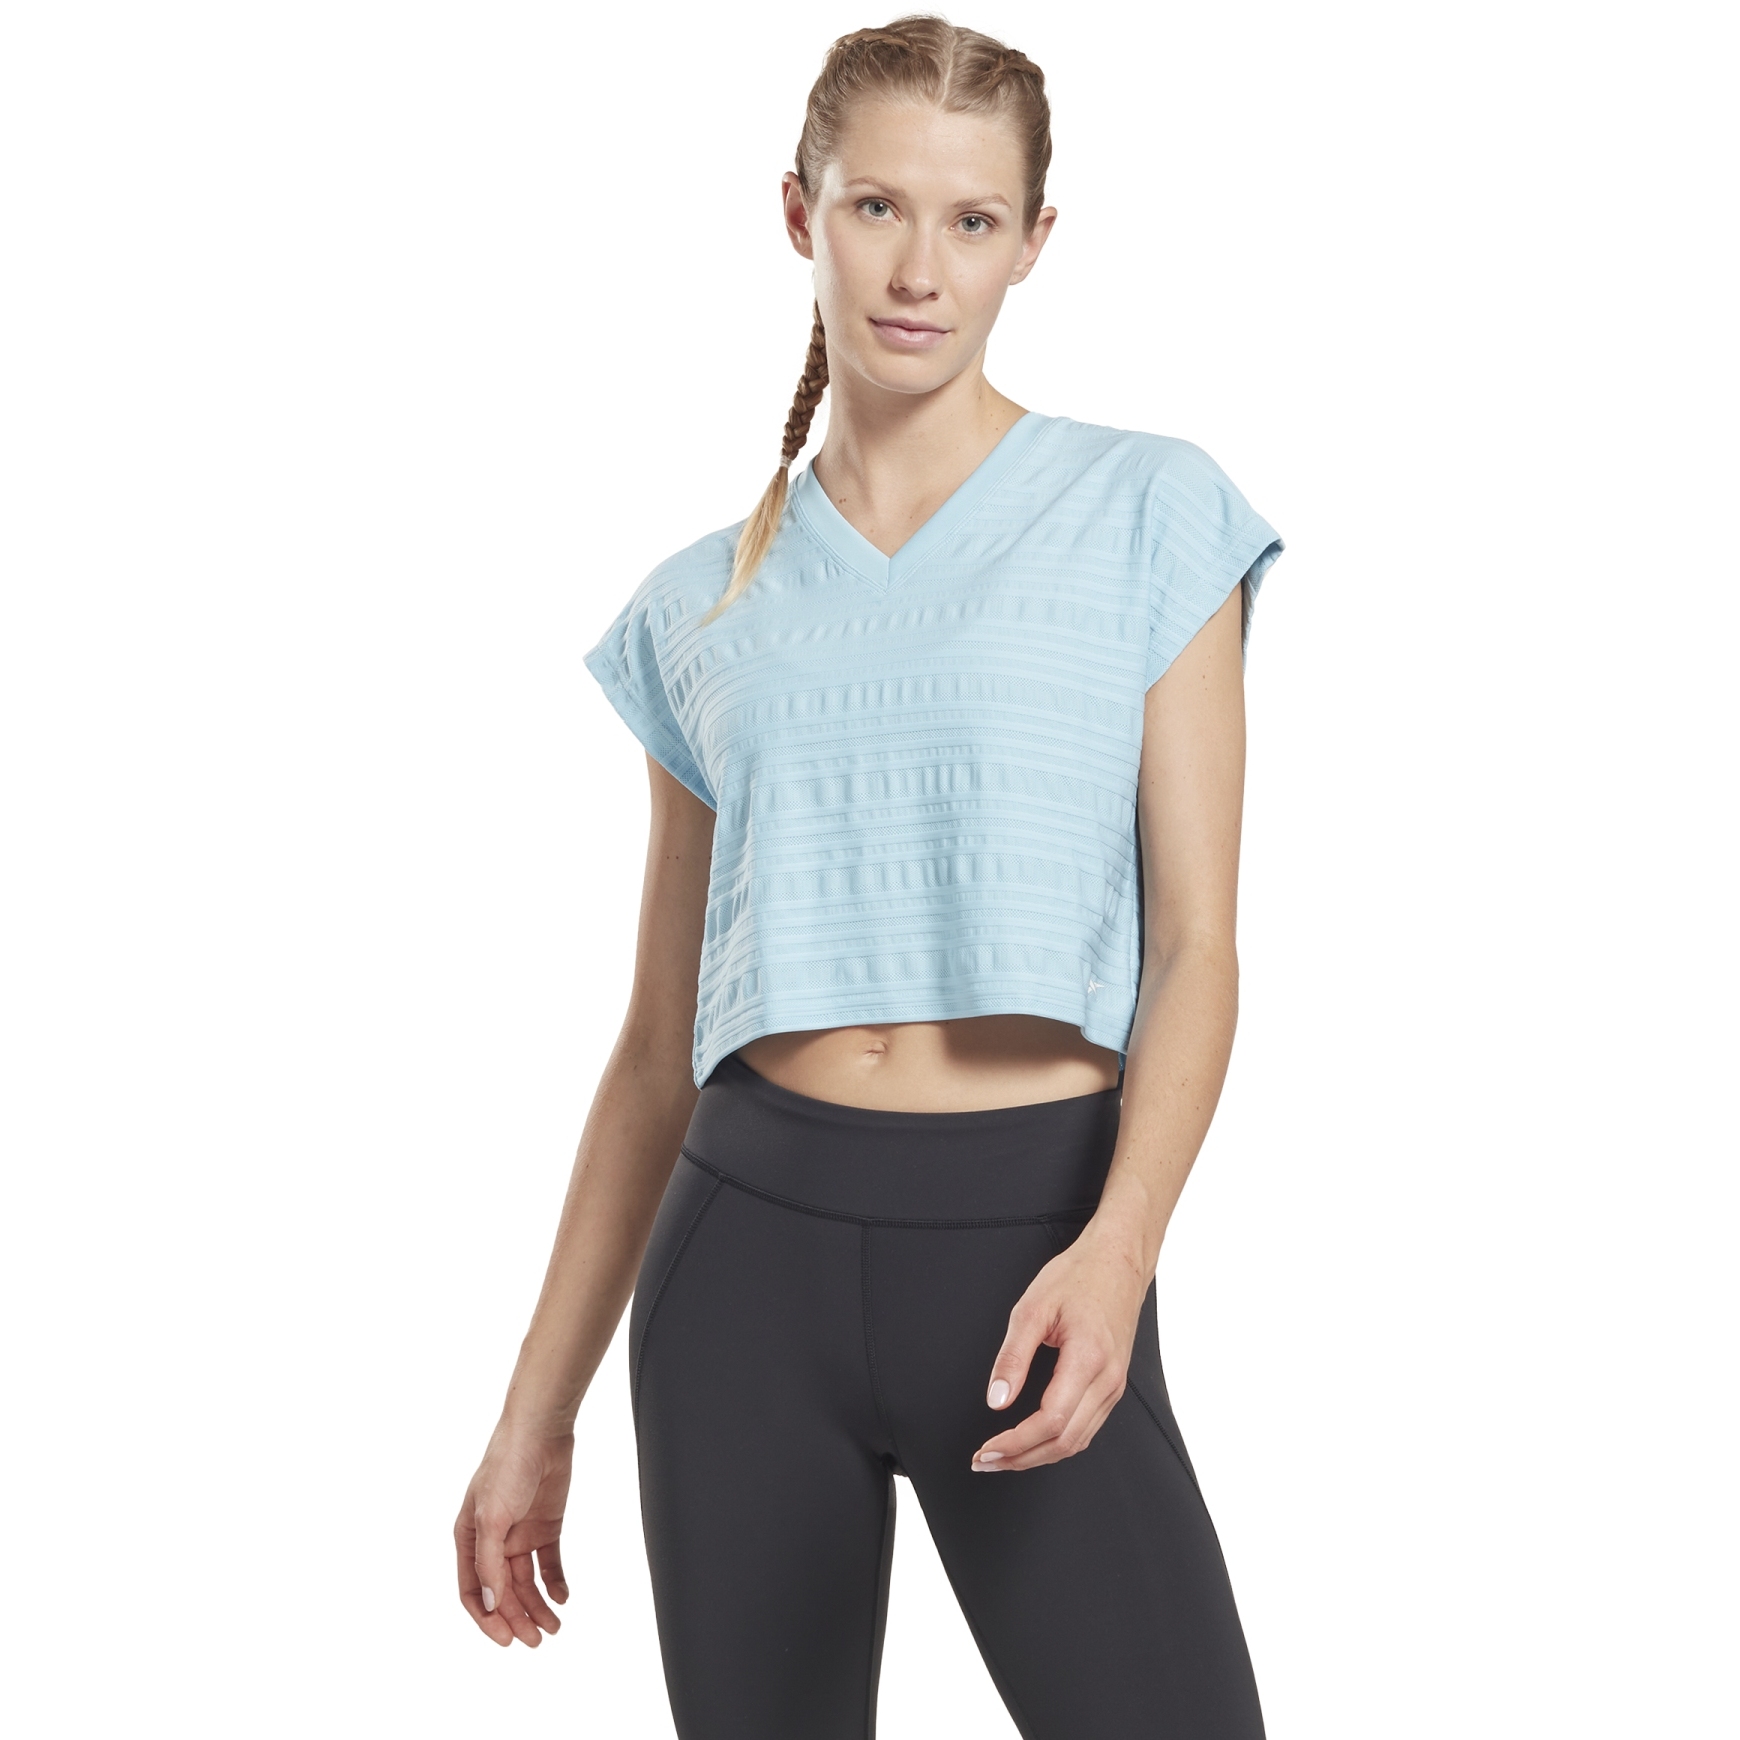 Productfoto van Reebok Perforated T-Shirt Dames - blue pearl